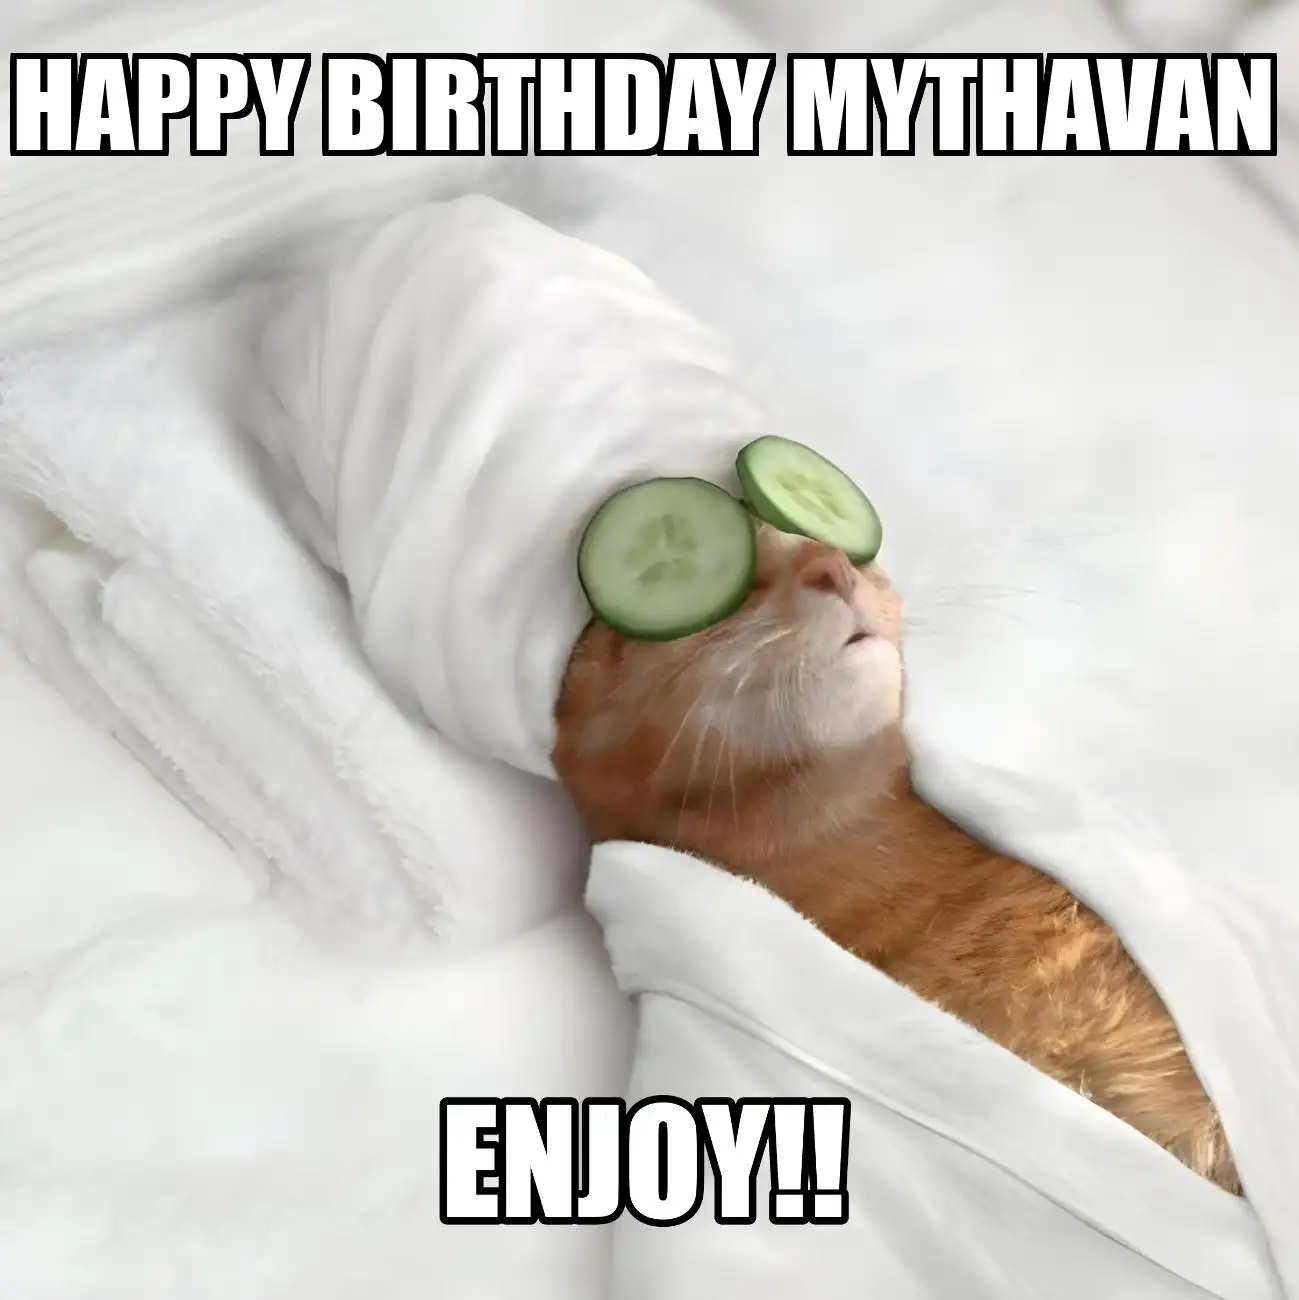 Happy Birthday Mythavan Enjoy Cat Meme